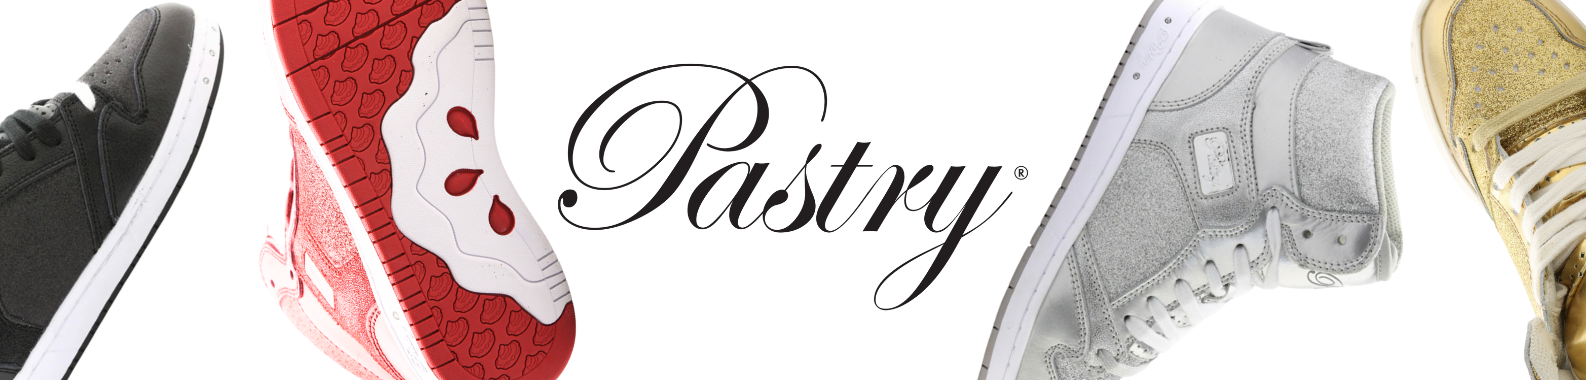 Pastry brand header image